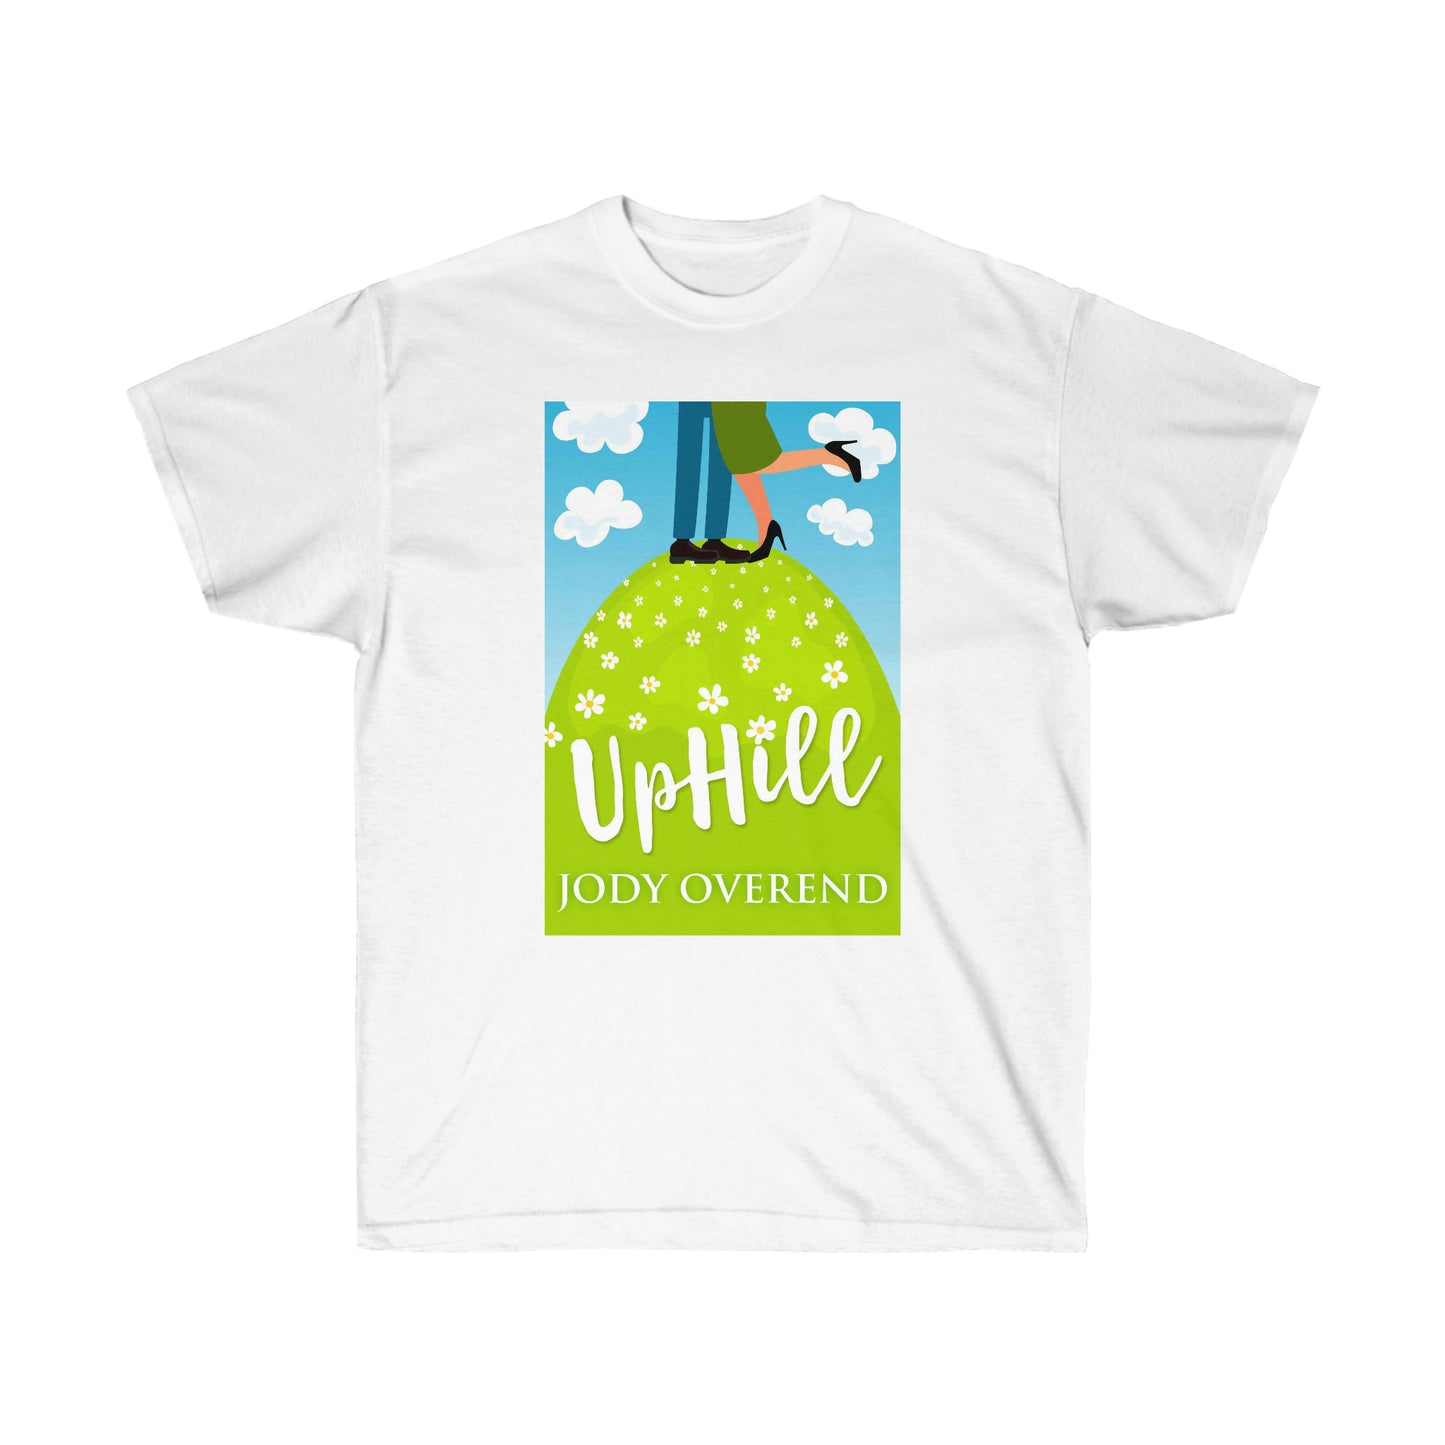 UpHill - Unisex T-Shirt